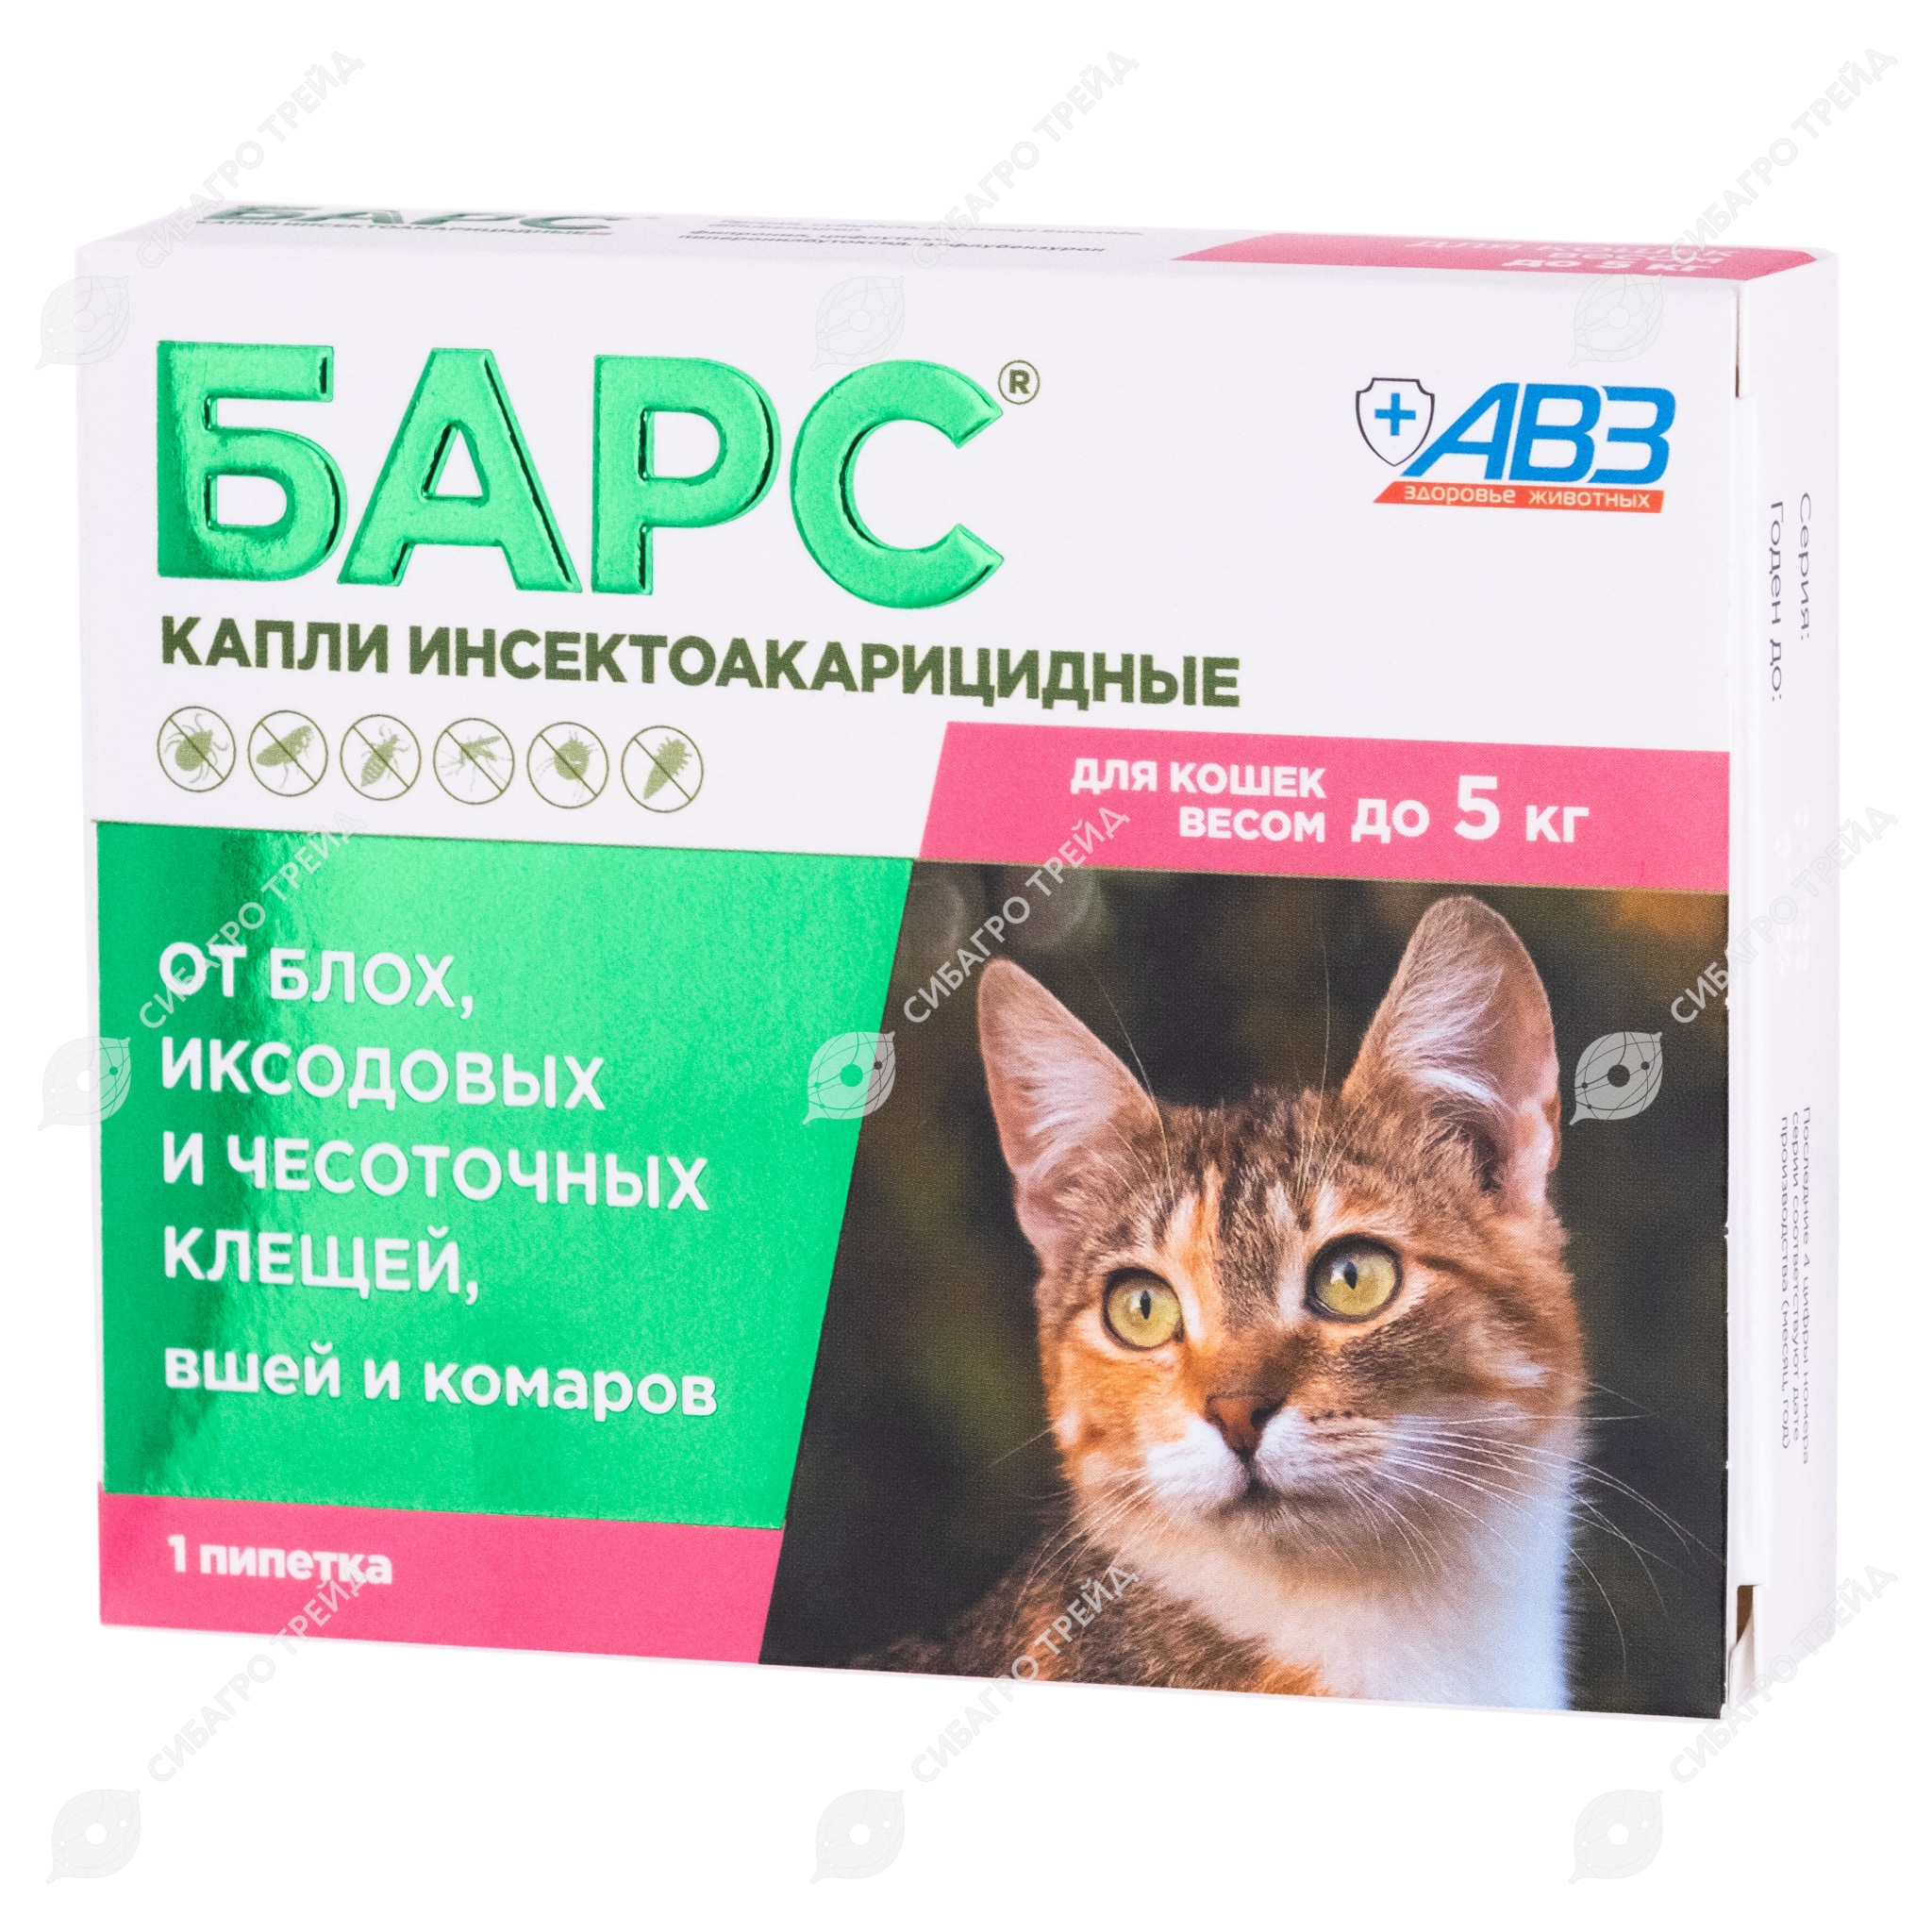 Барс классик отзывы. Барс капли инсектоакарицидные для кошек до 5 кг 1 пипетка. Капли для кошек АВЗ Барс. Барс капли инсектоакарицидные для кошек от 5 до 10кг. Капли инсектоакарицидные Барс для кошек от 2 до 5 кг.